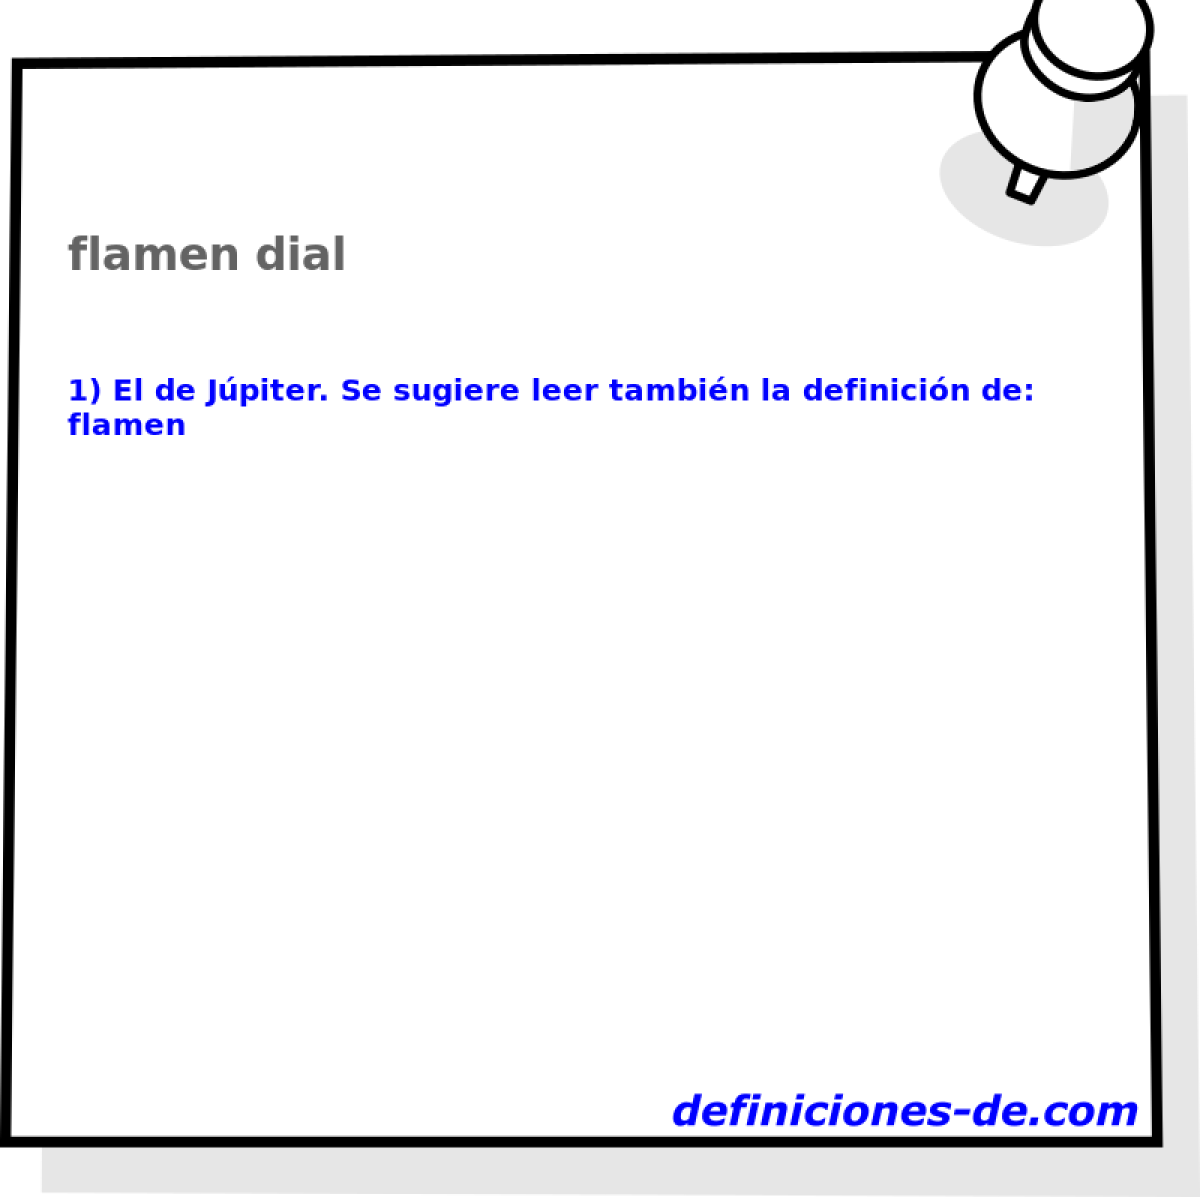 flamen dial 